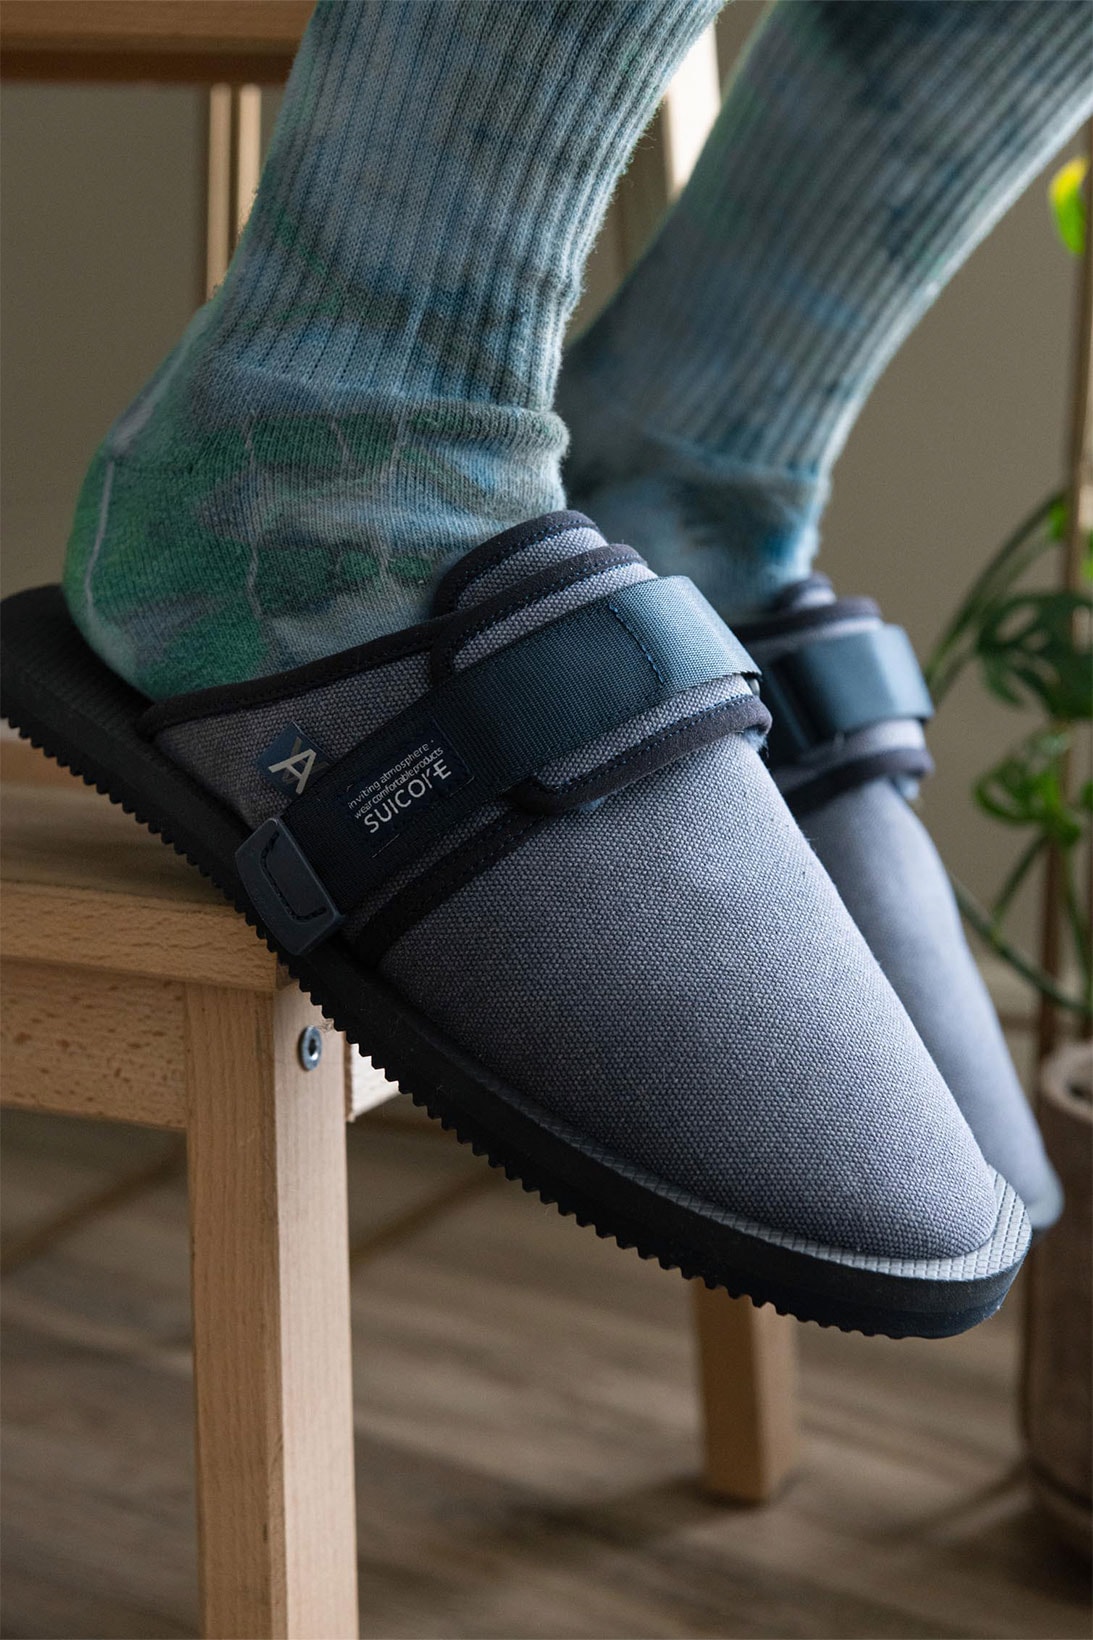 Daniel Arsham Suicoke ZAVO Slippers Slides Gray Tie Dye Blue Socks